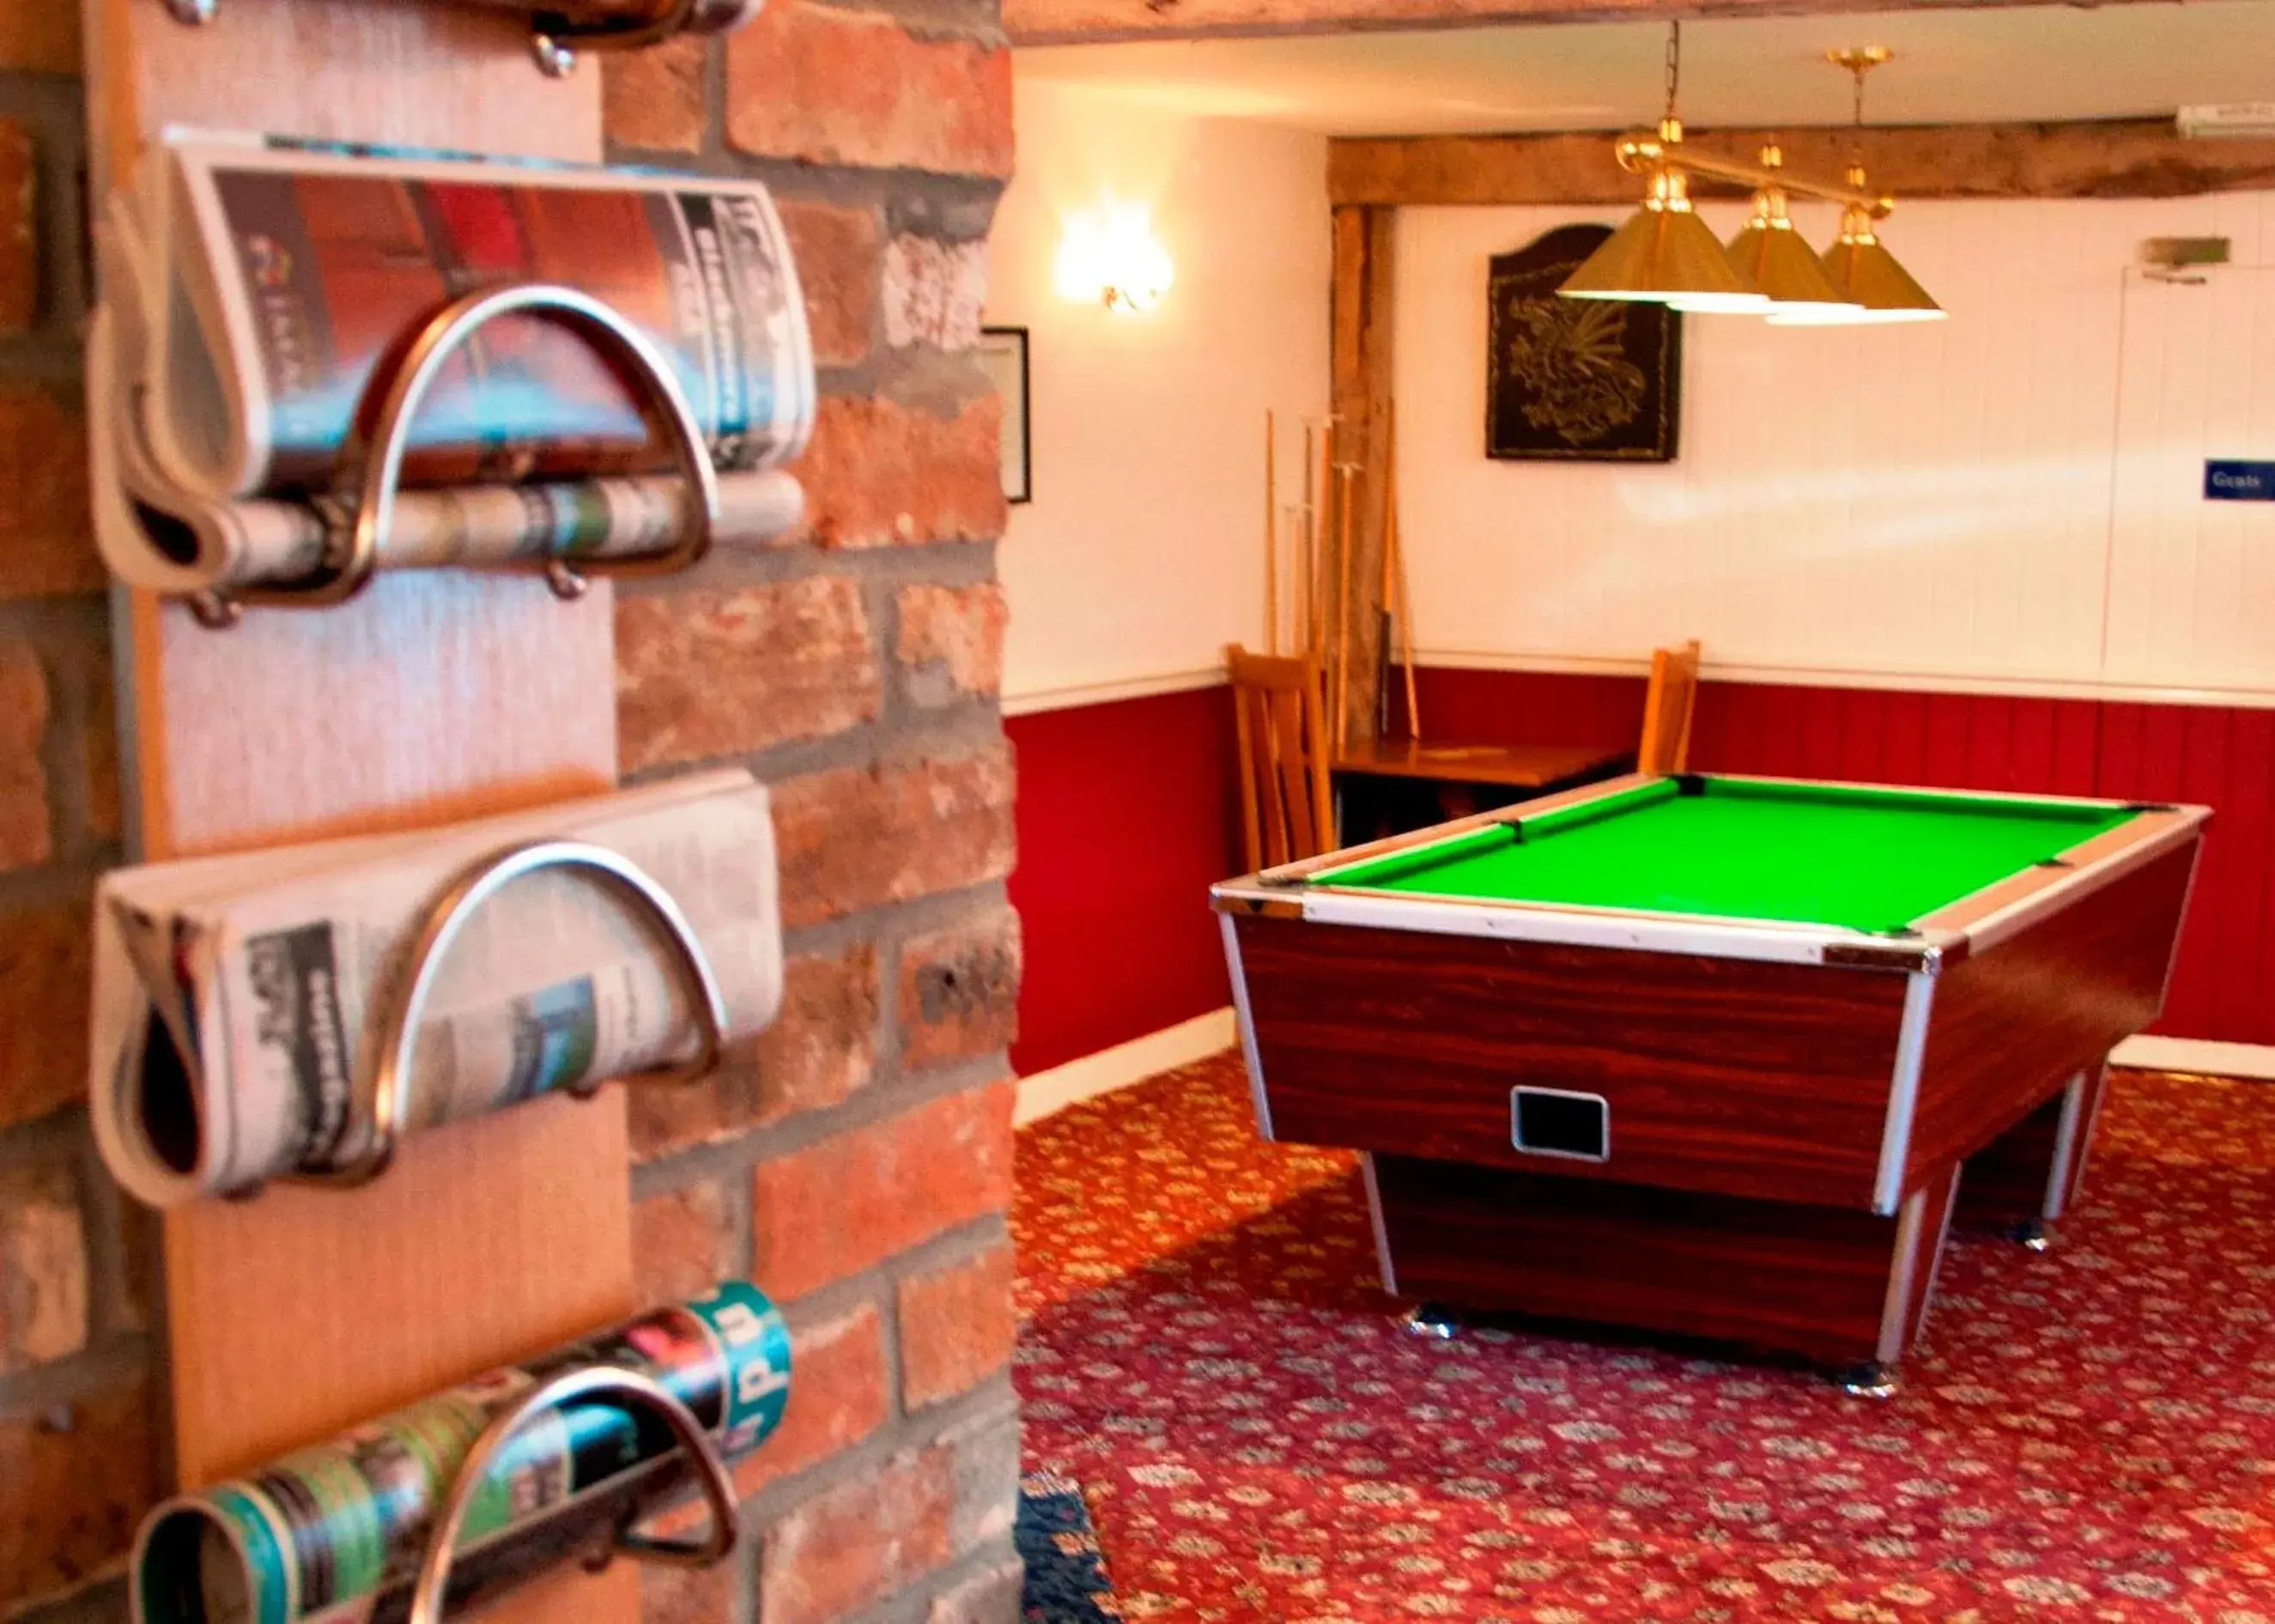 Game Room, Billiards in New Inn - Dorchester